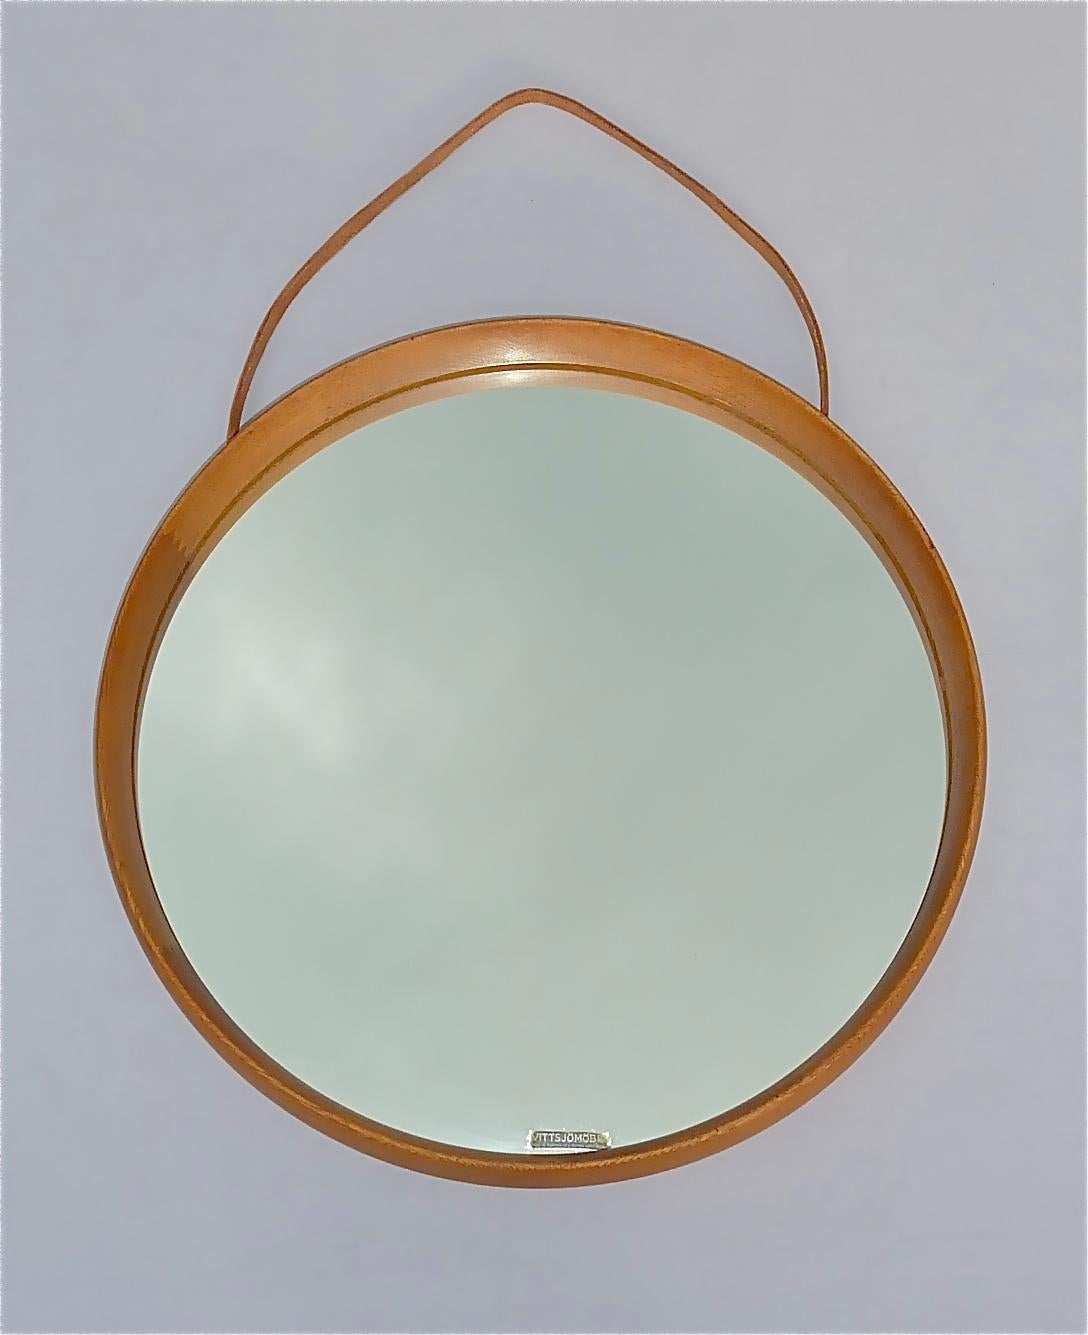 Signed Round Wall Mirror Vittsjö Östen Kristiansson Oak Wood Leather, 1960s For Sale 6